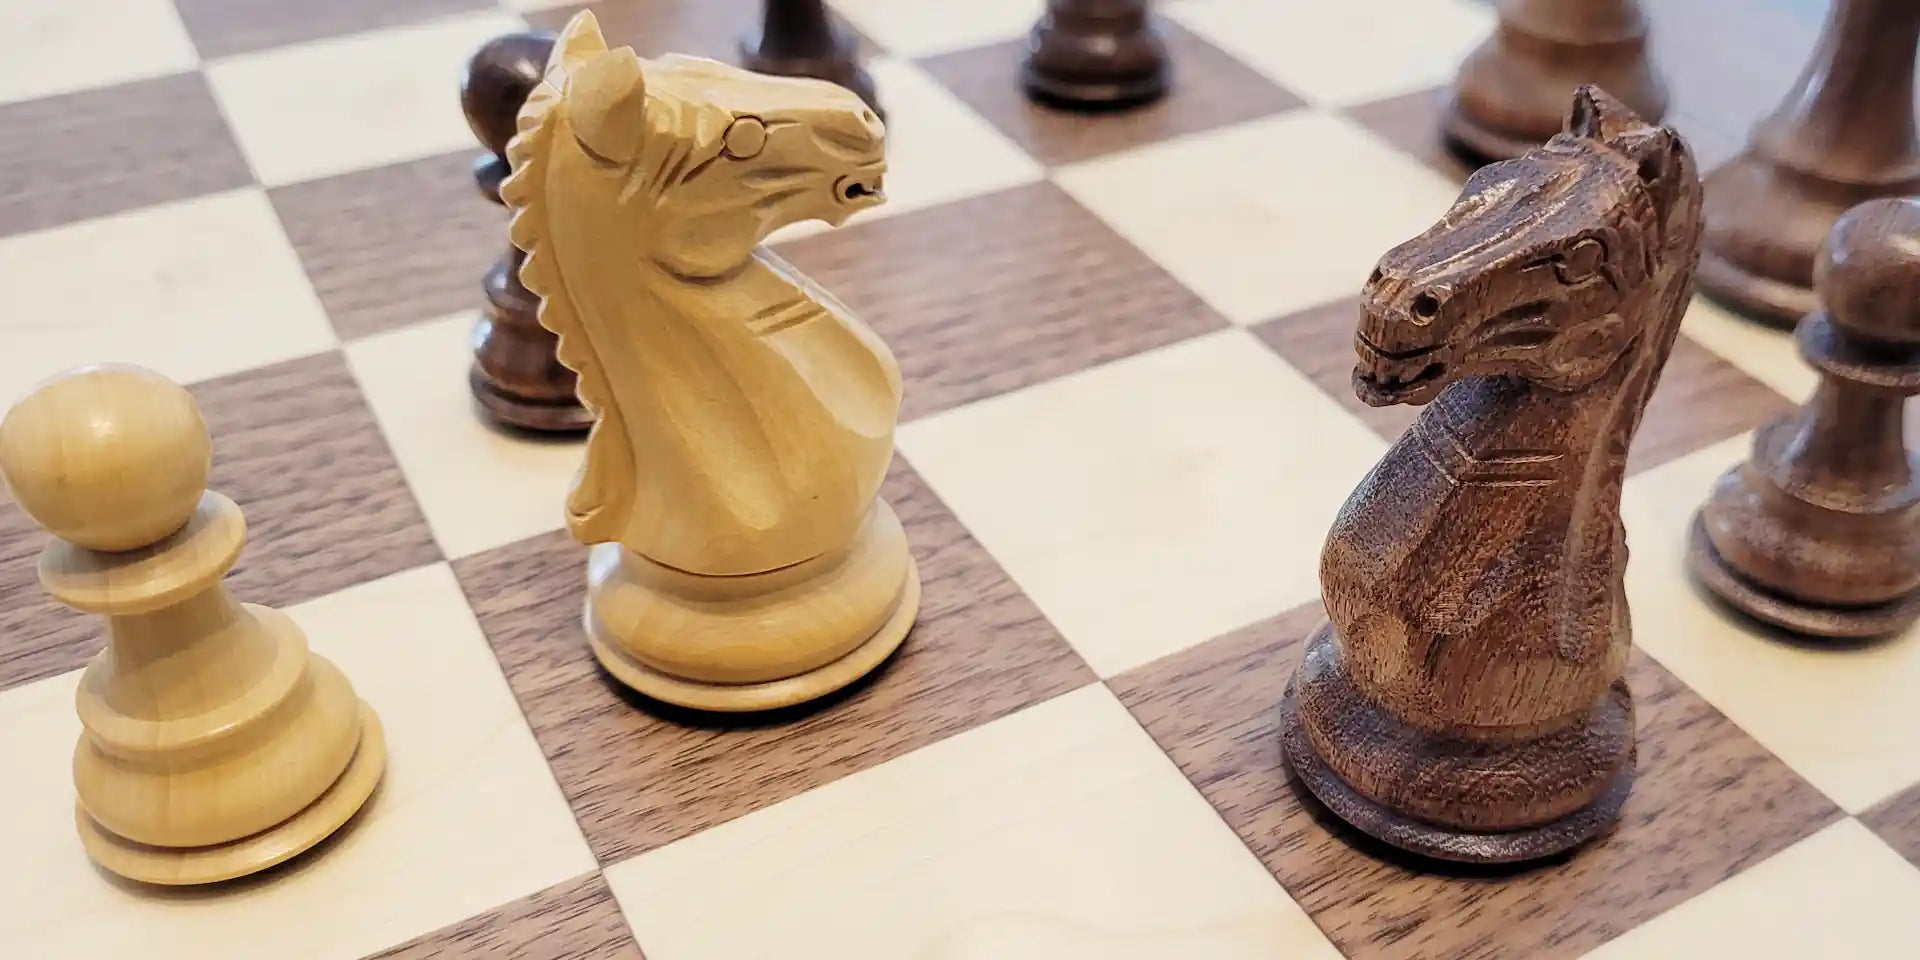 Chess Opening: The Queen's Gambit – Chess Chivalry